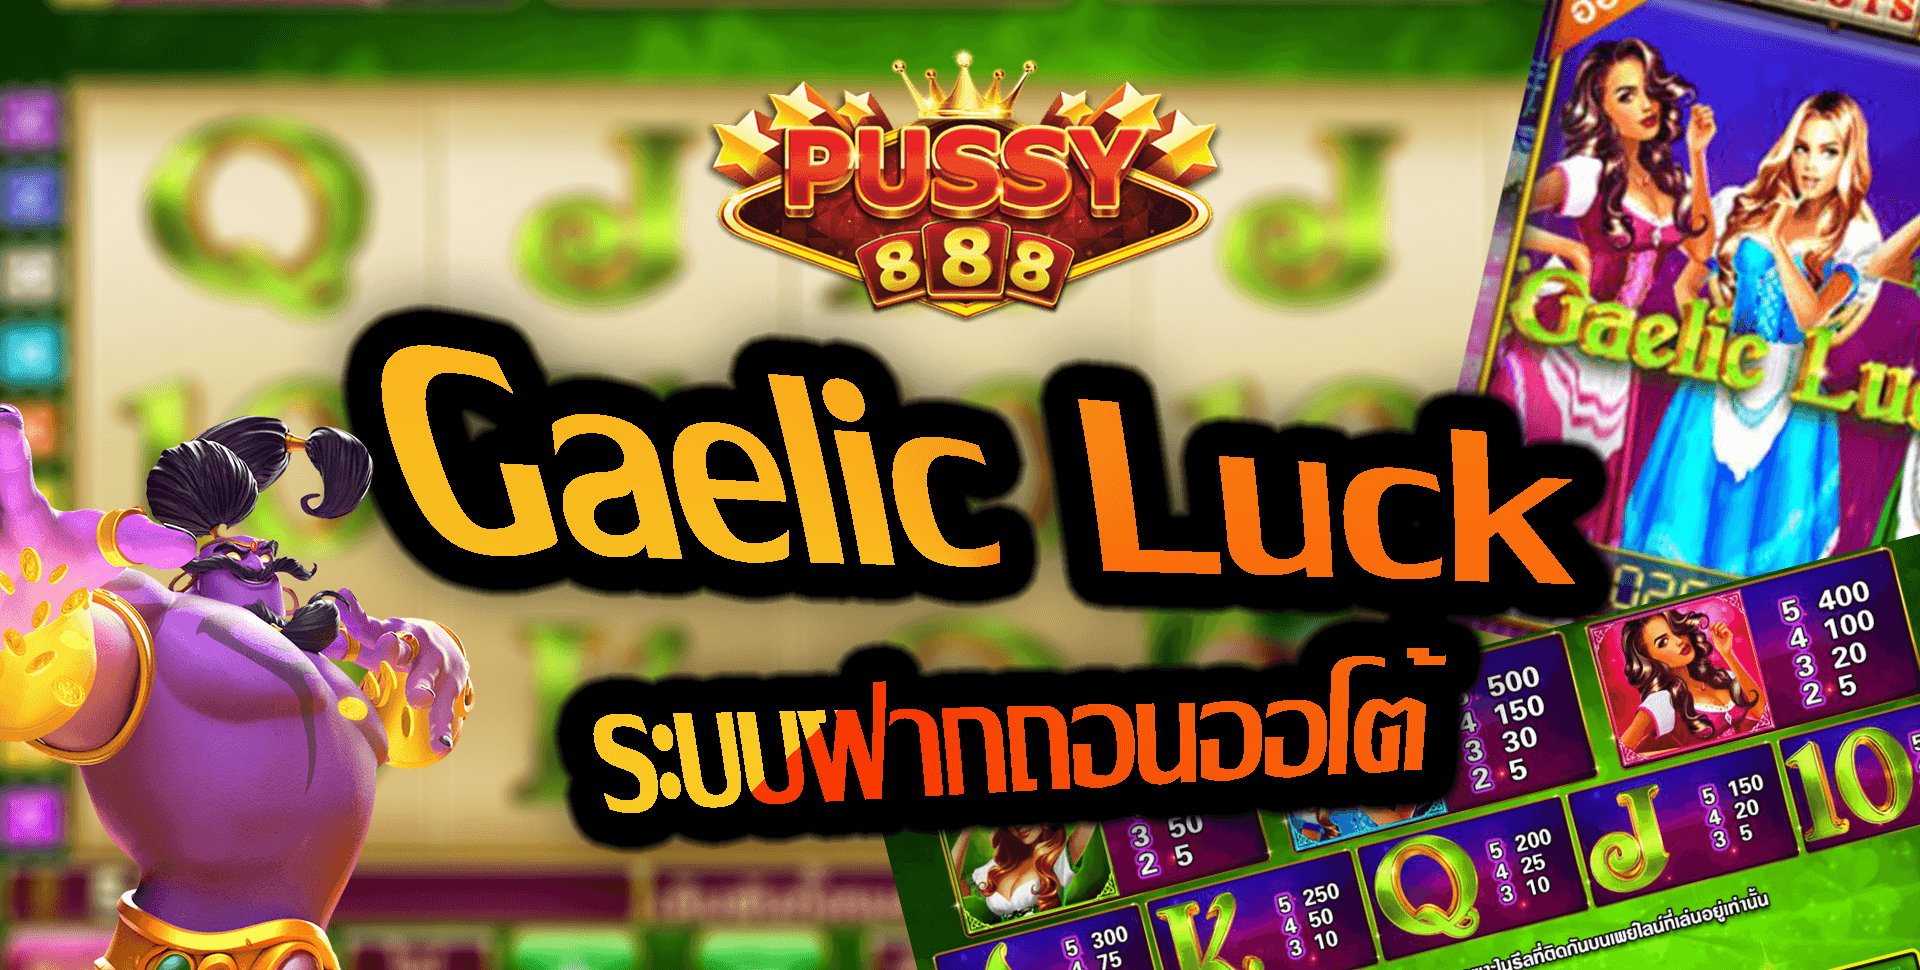 Pussy888-Gaelic Luck-puss888-5